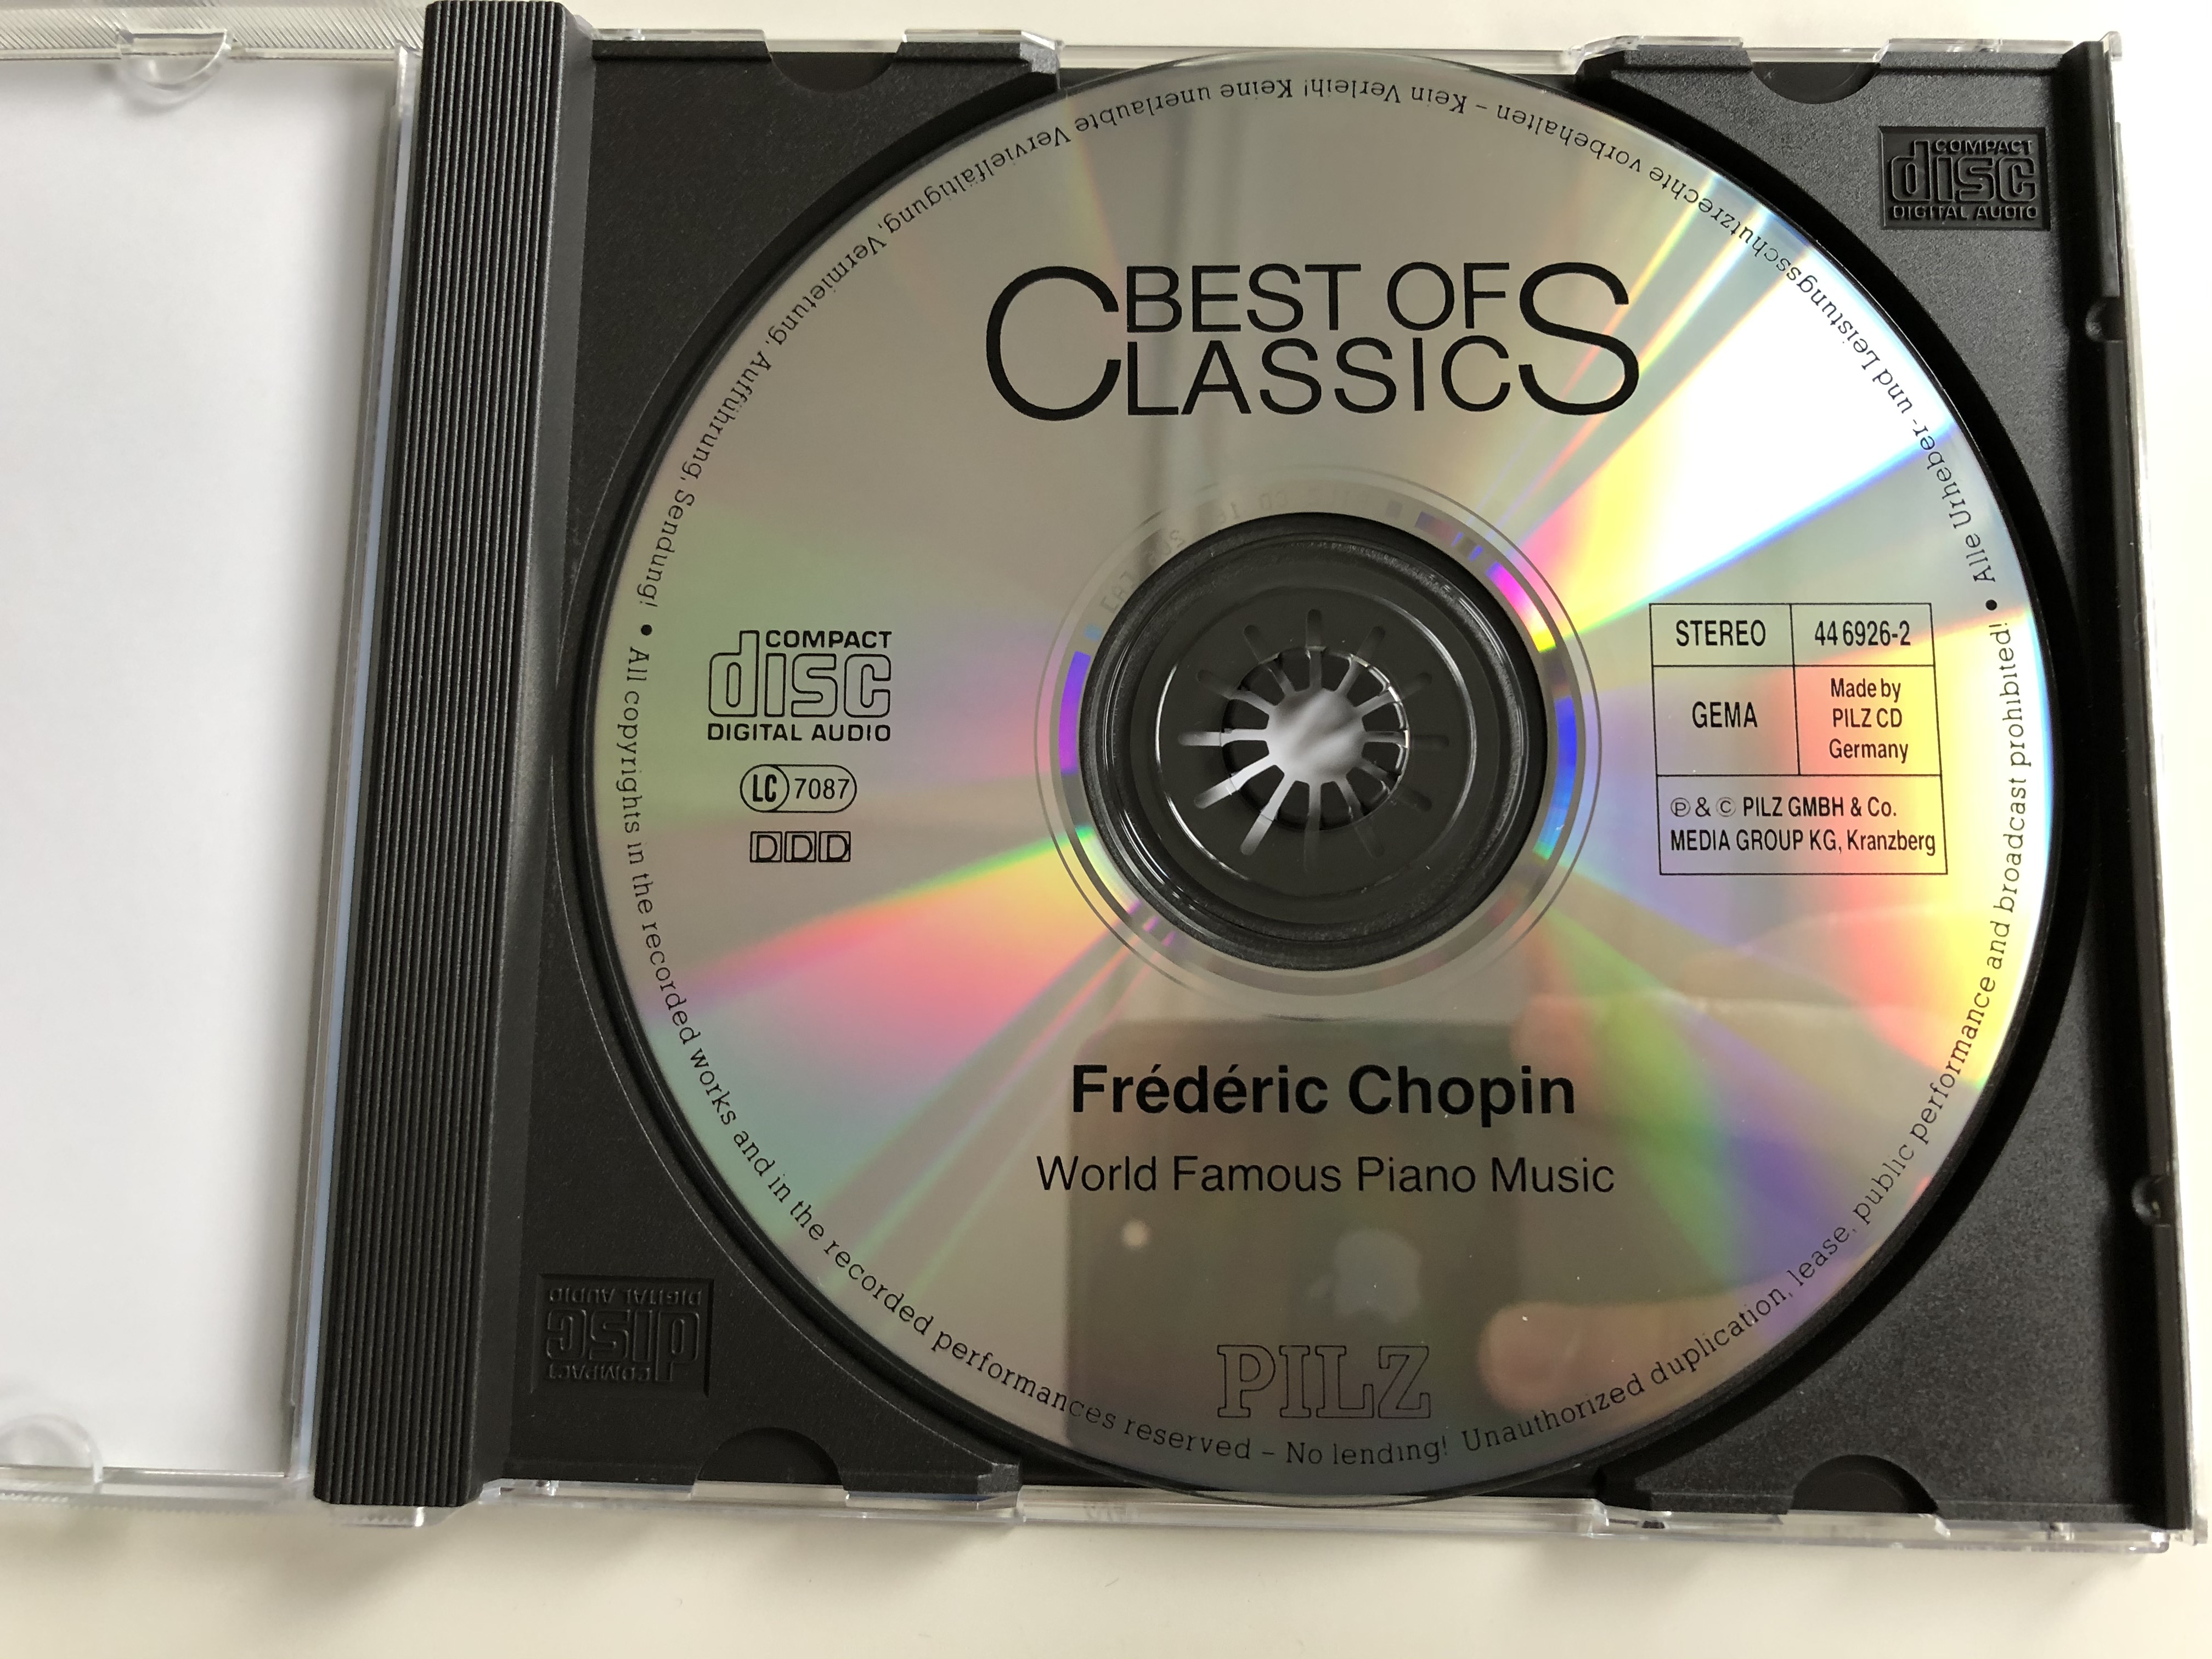 fr-d-ric-chopin-world-famous-piano-music-best-of-classics-pilz-audio-cd-1991-stereo-446926-2-2-.jpg